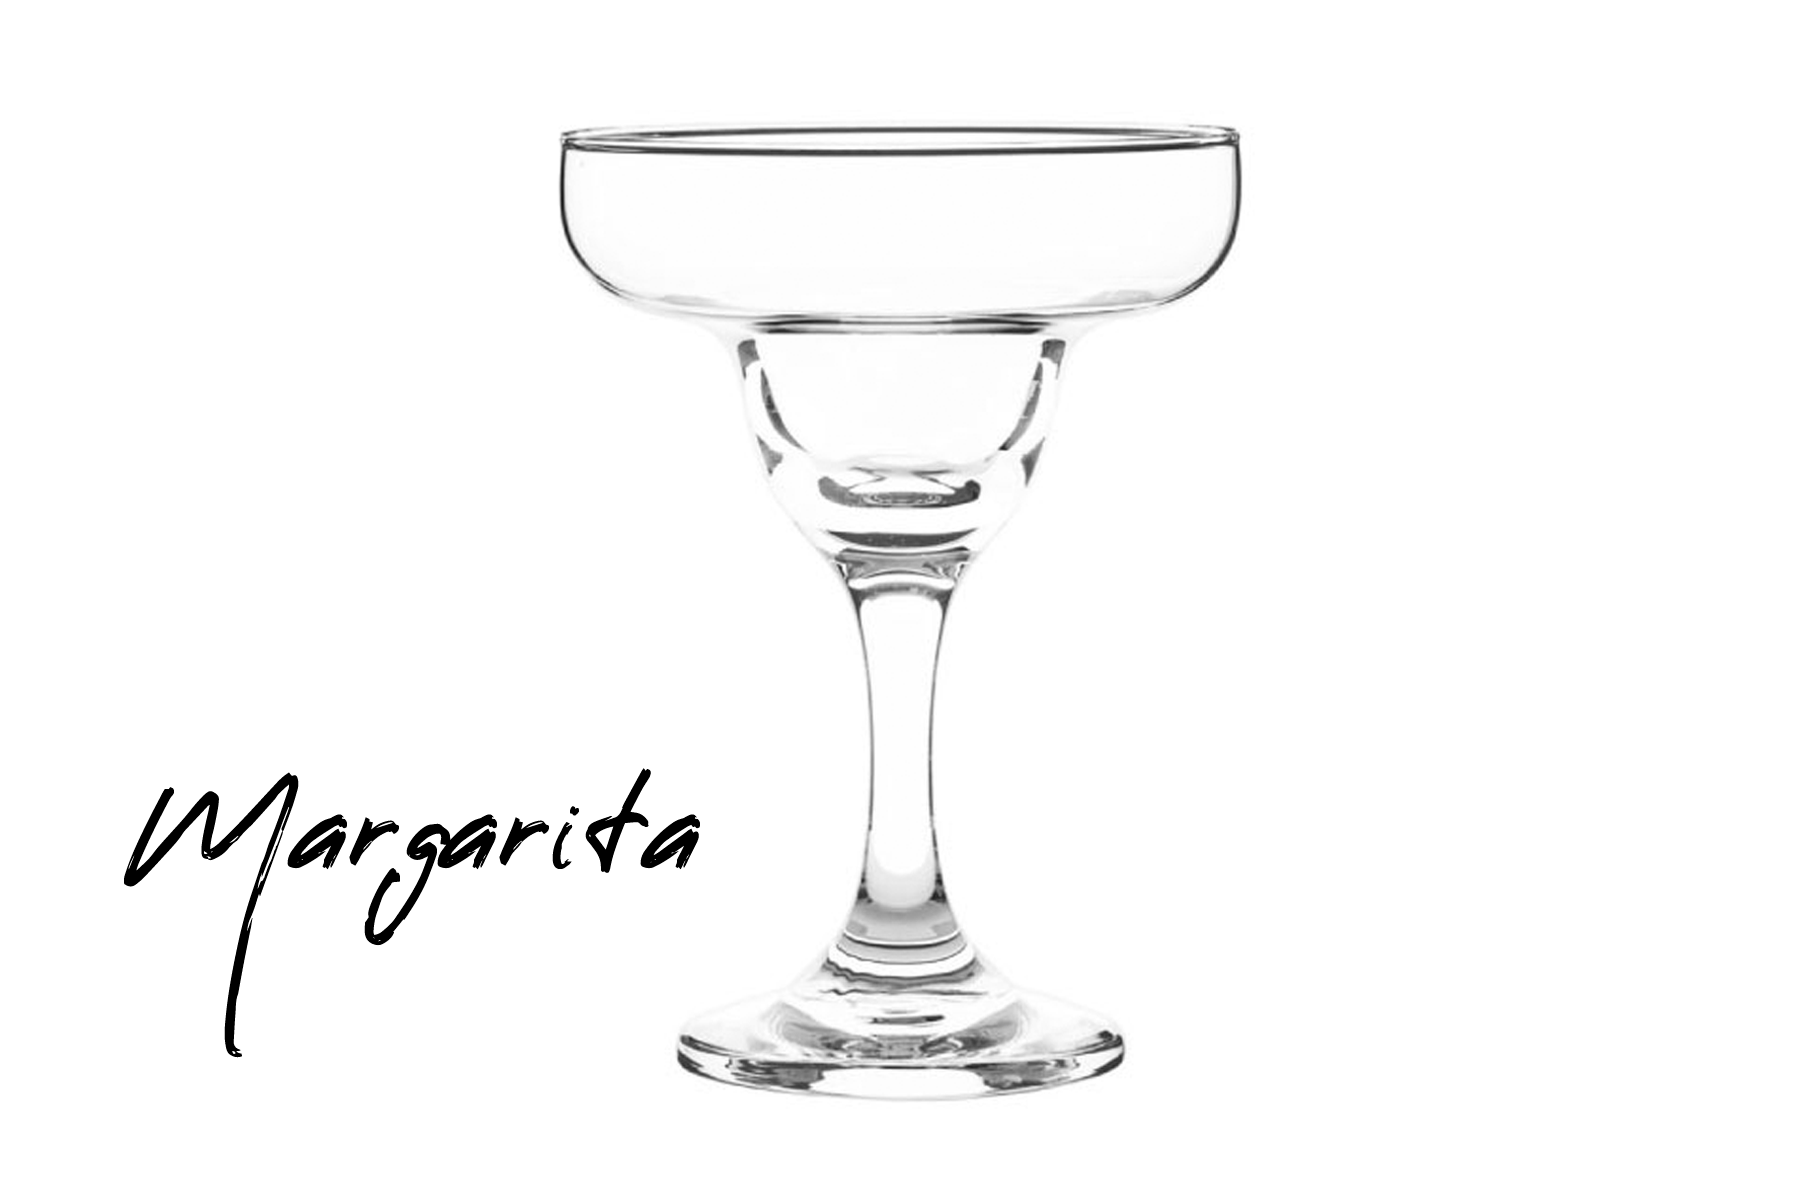 https://www.homecenter.com.co/static/landing/guiasdecompra/Guias_de_compra_2/img/copas-y-vasos-para-cada-bebida/Margarita.png